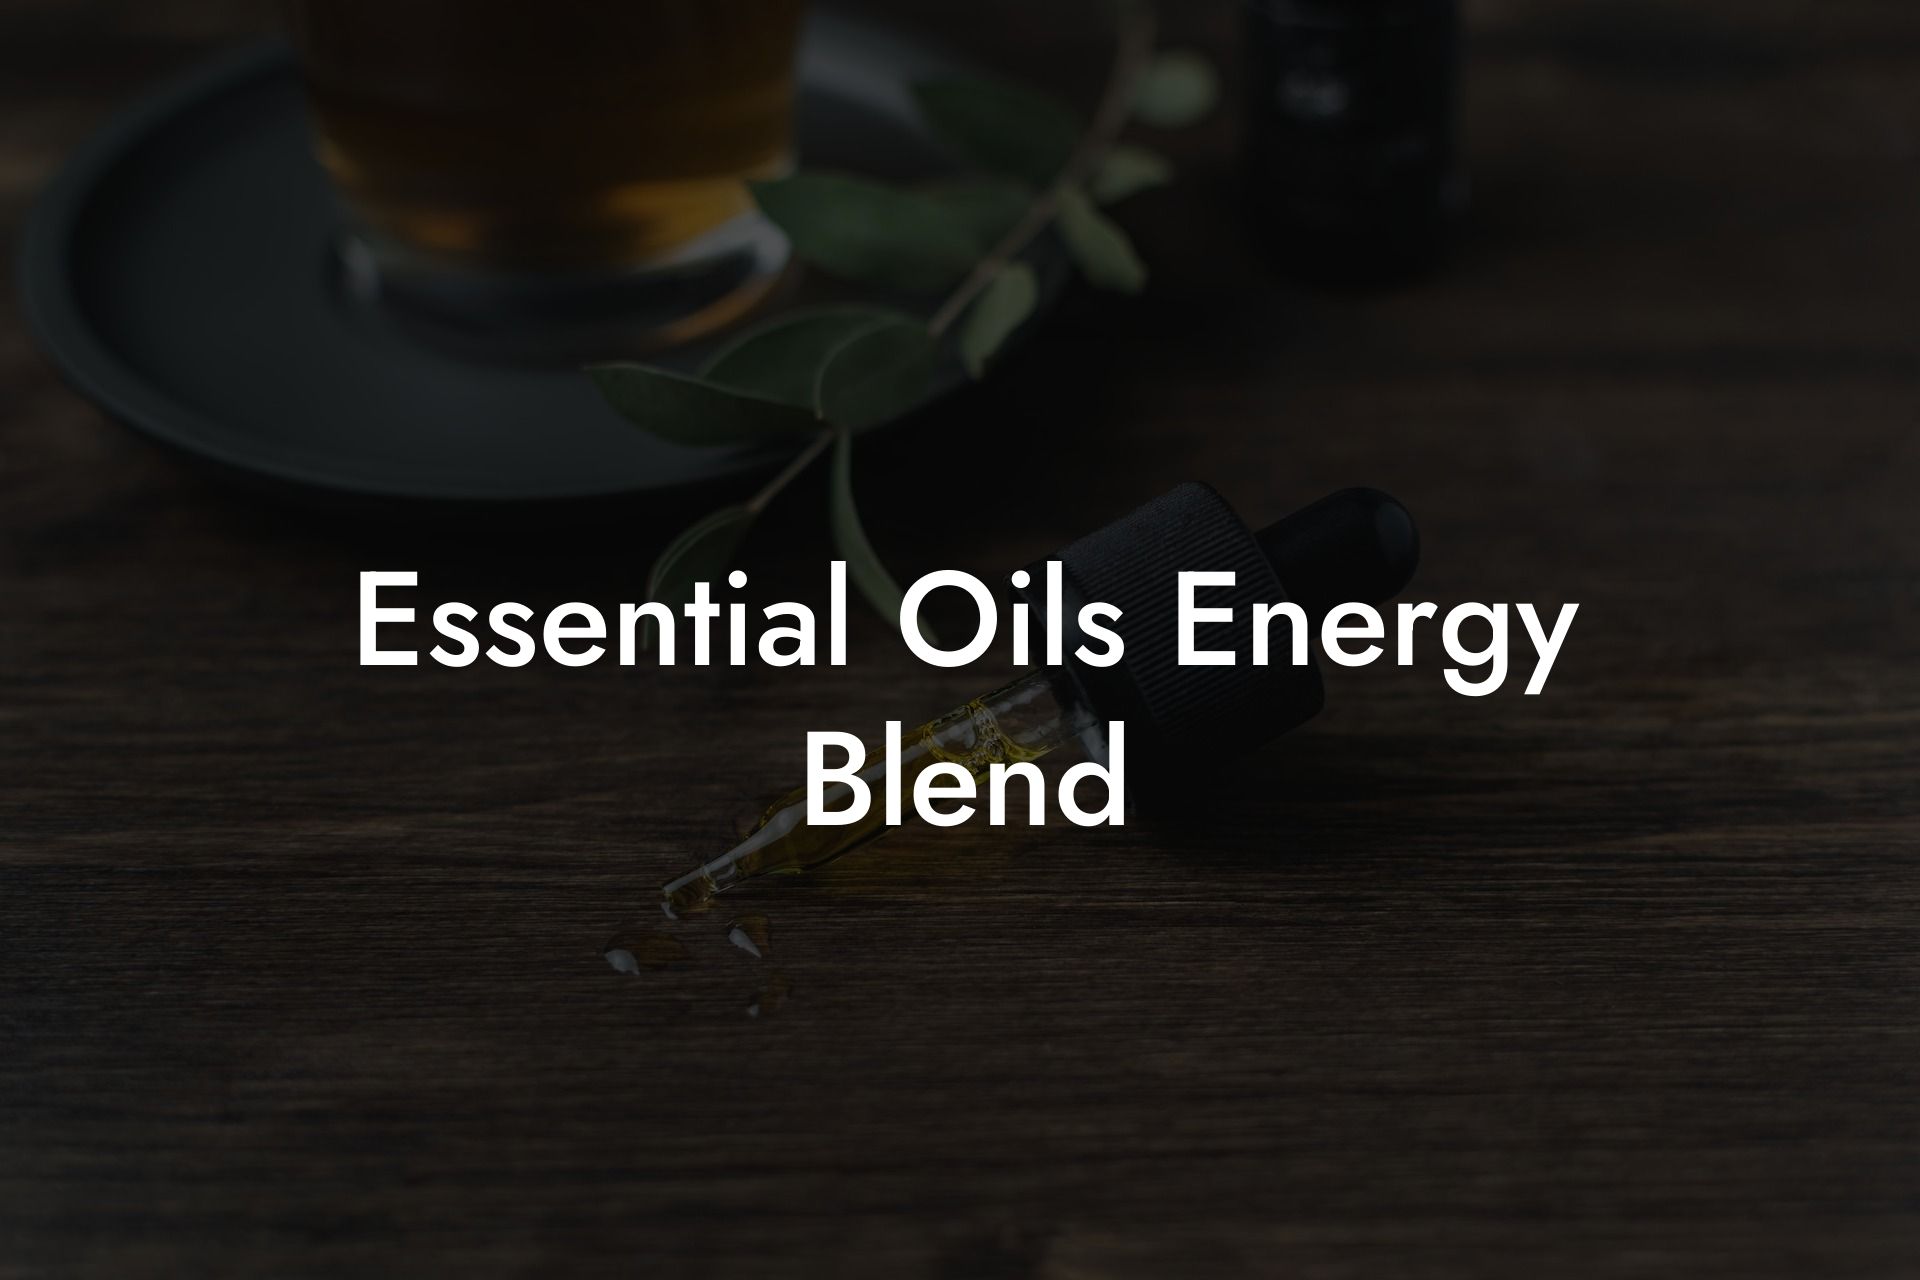 Essential Oils Energy Blend